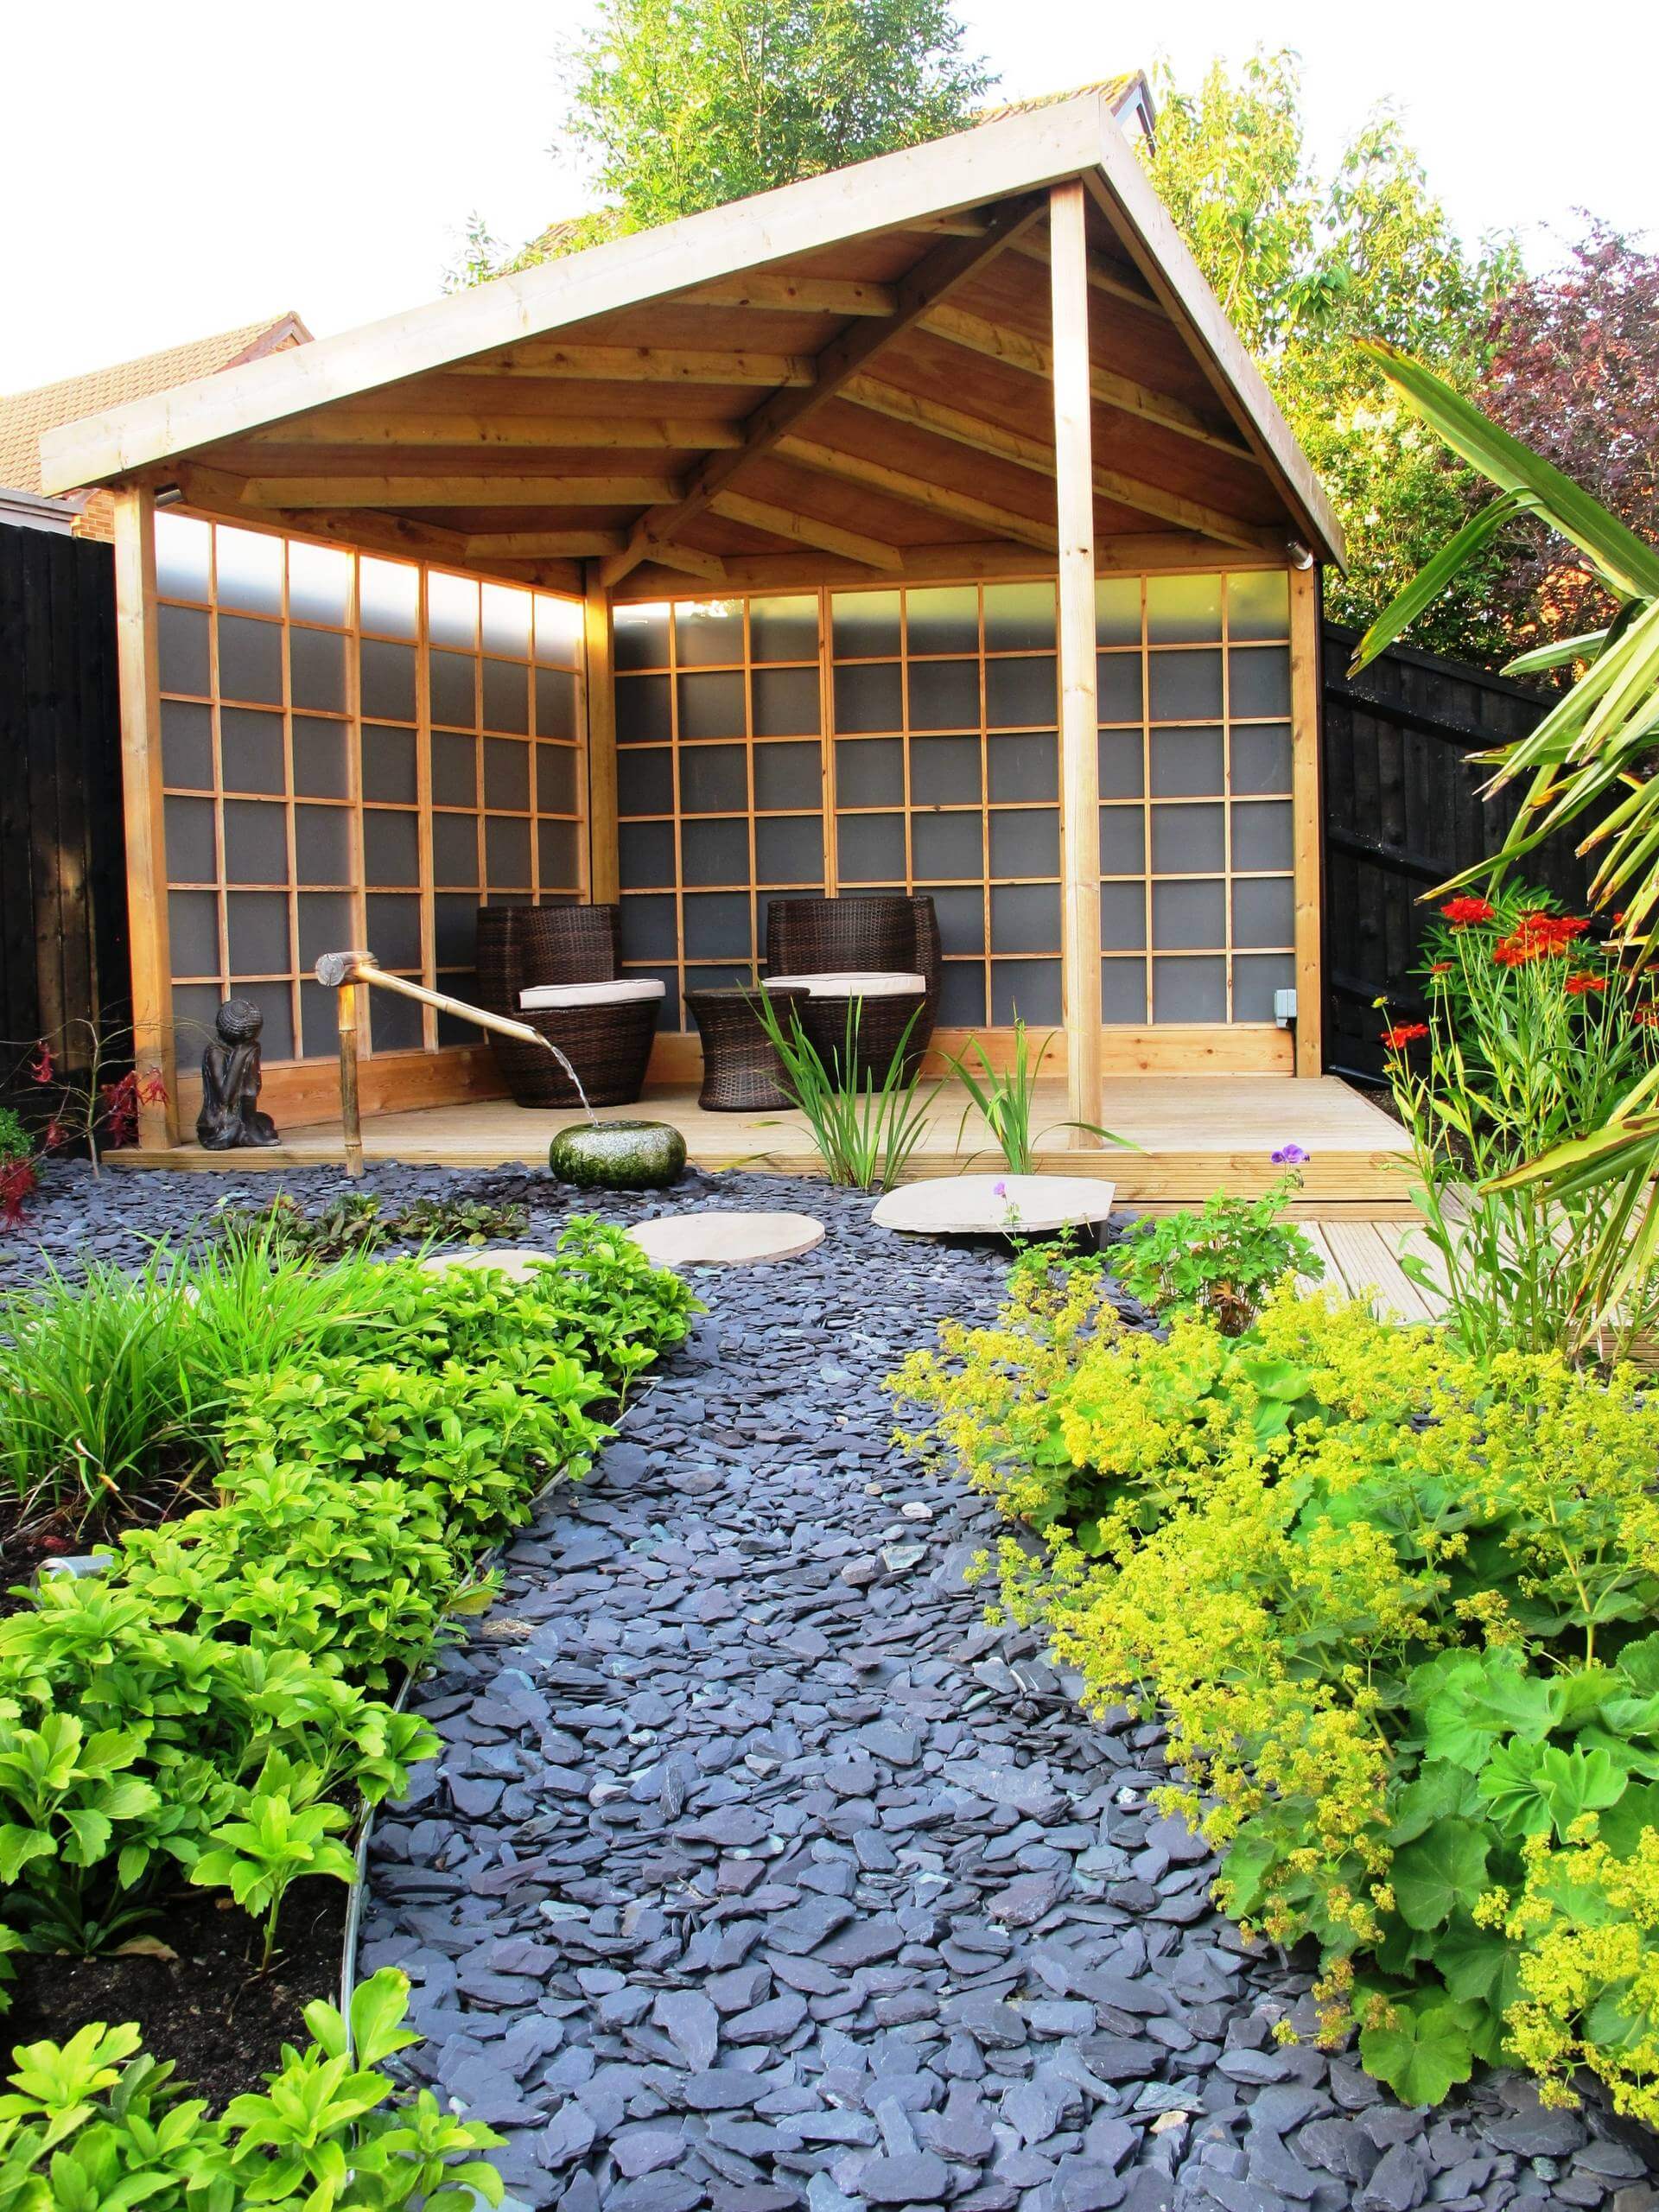 35+ Zen Garden Design Ideas Which Add Value To Your Home - The